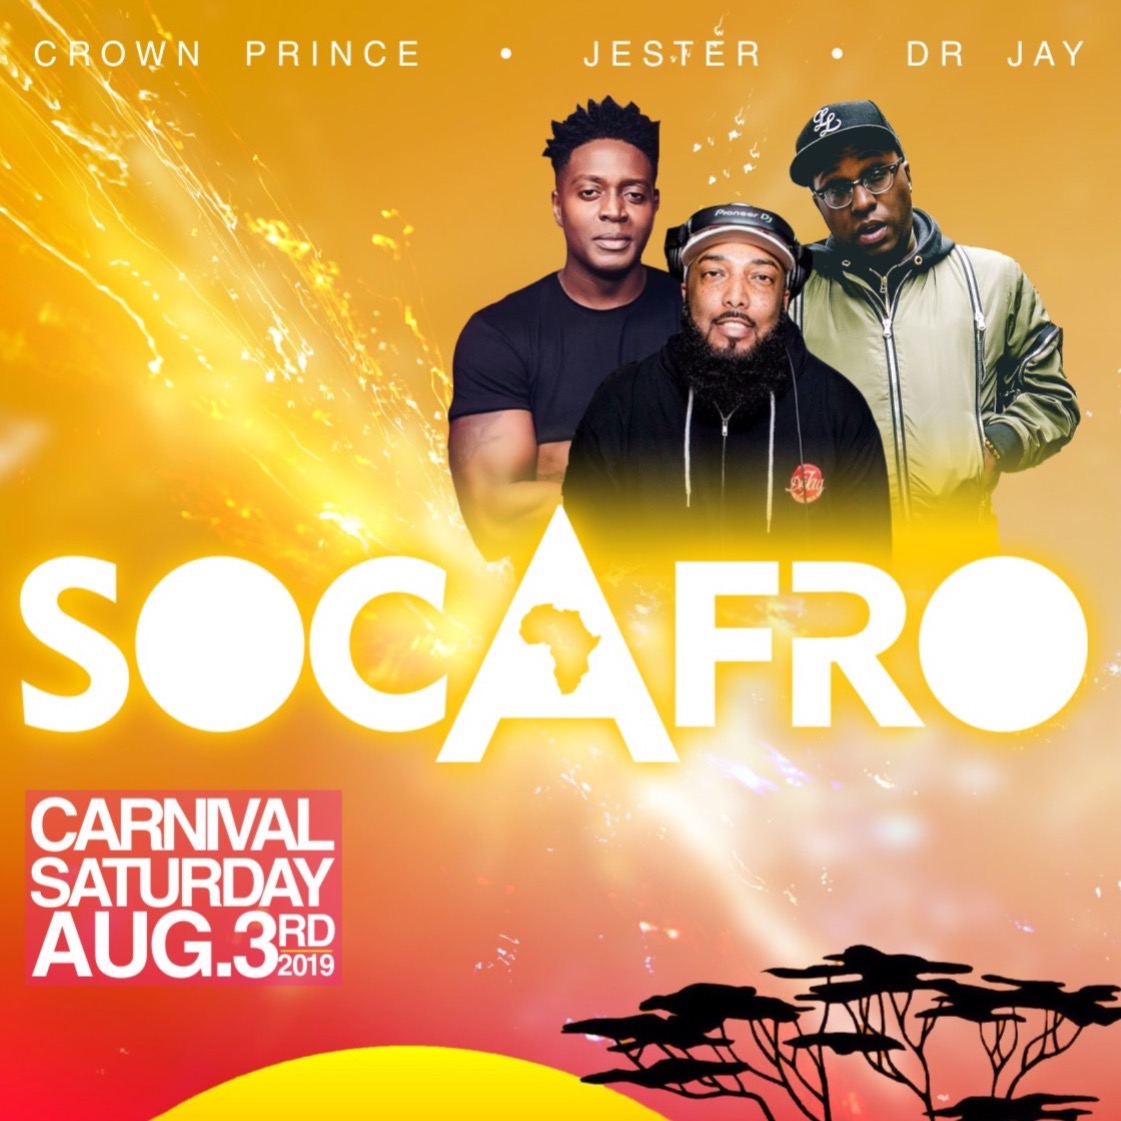 SOCAFRO Carnival Saturday